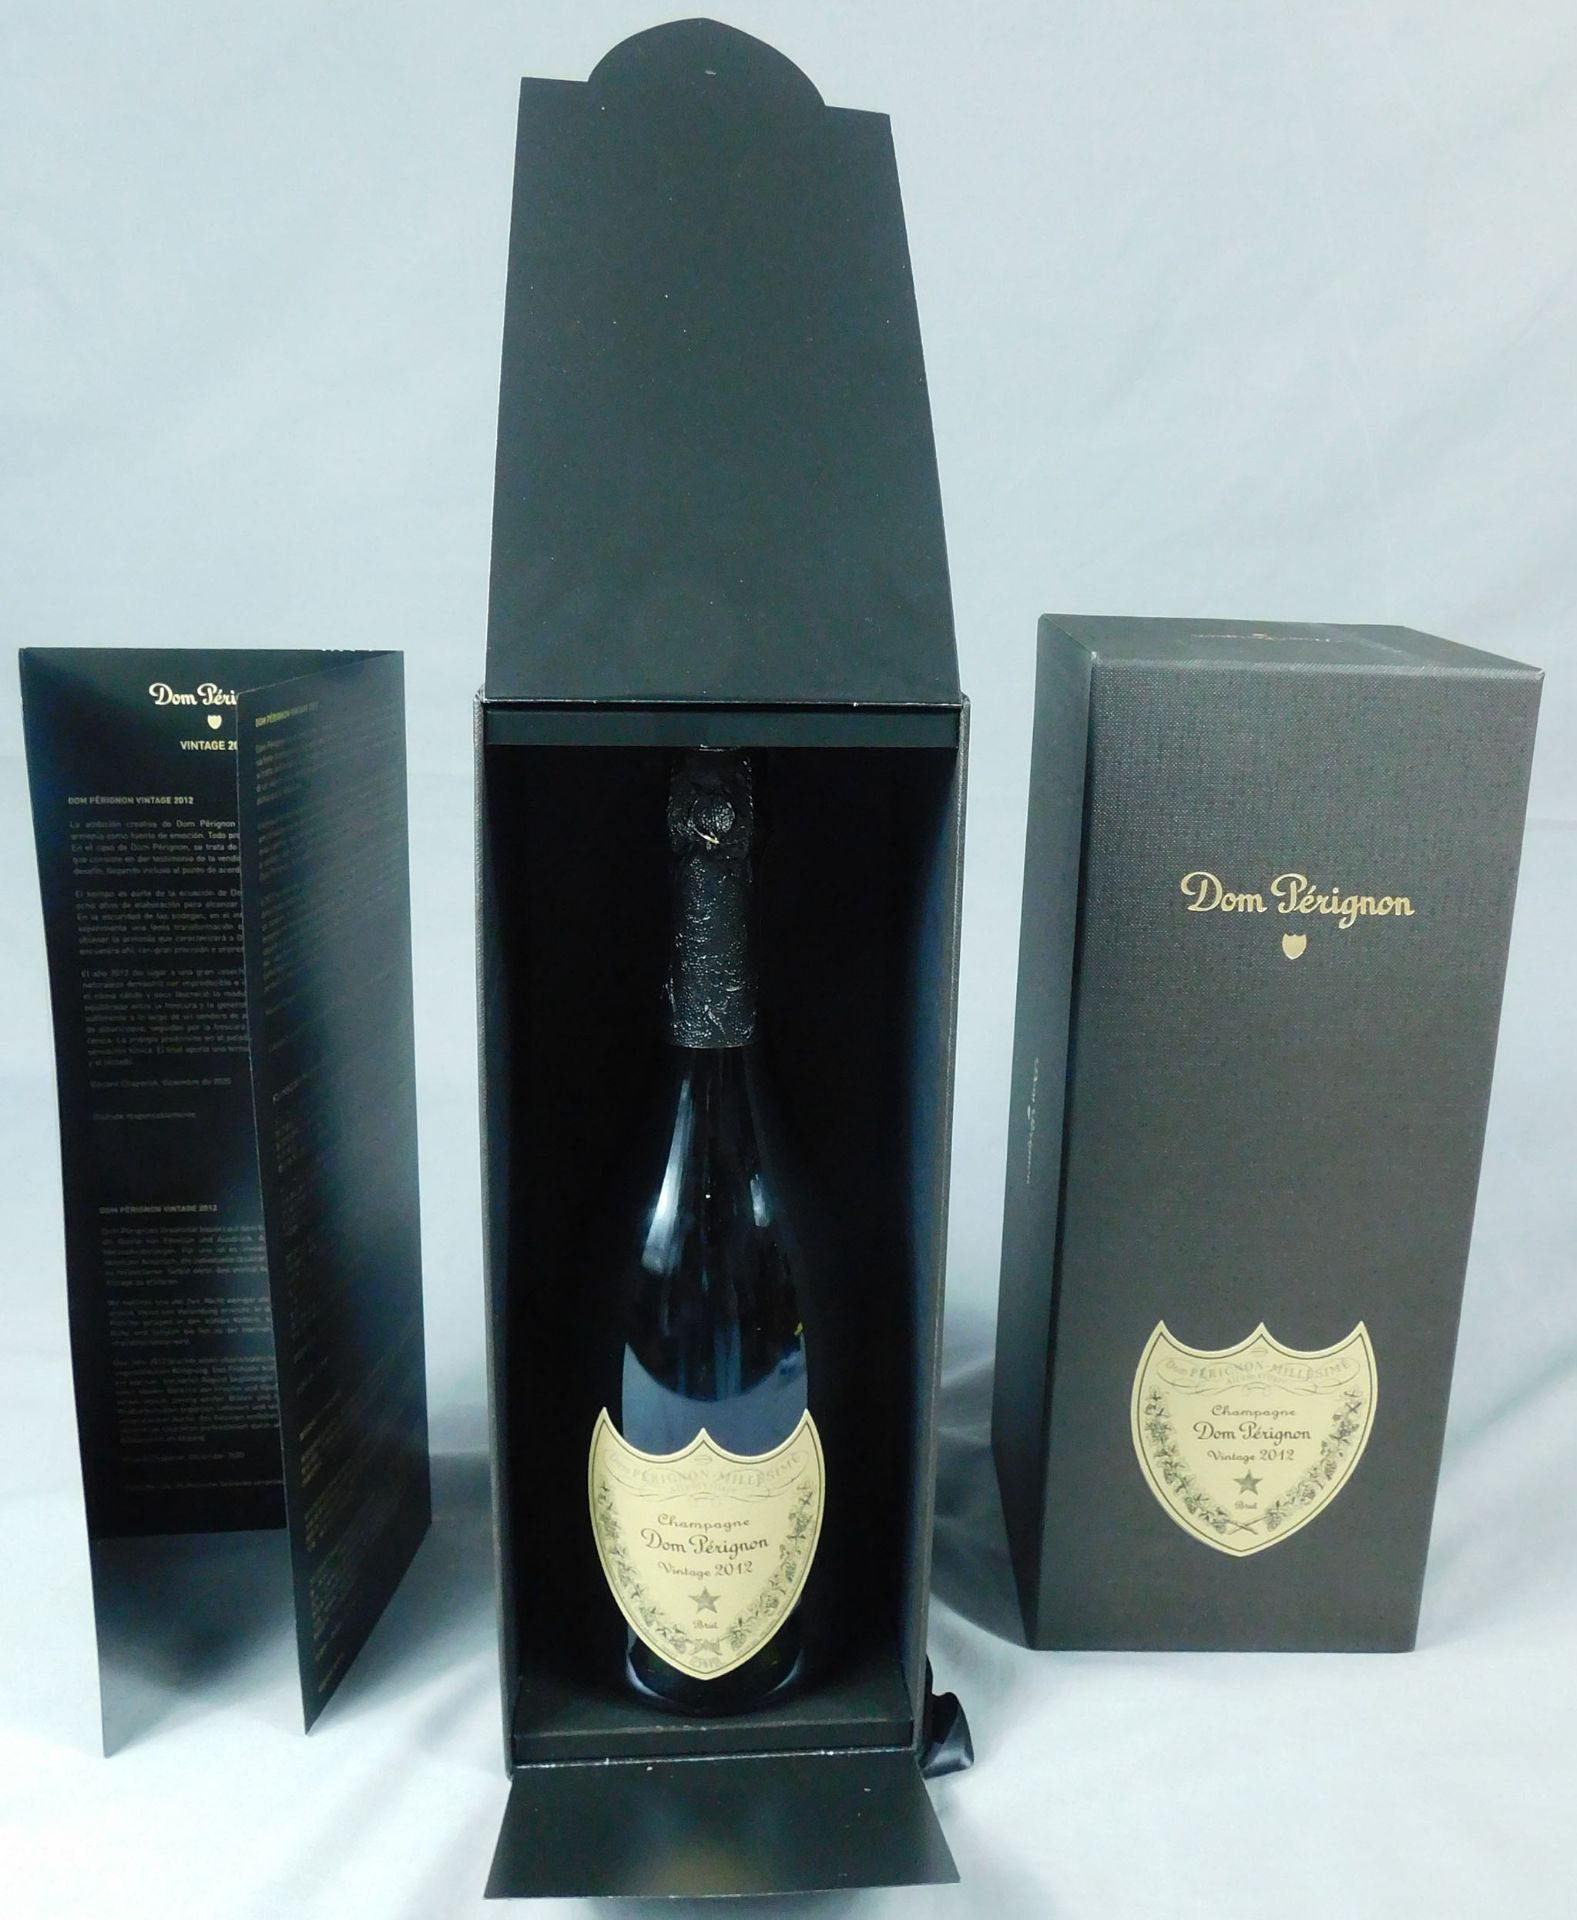 Champagner. Don Perignon. Vintage 2012.